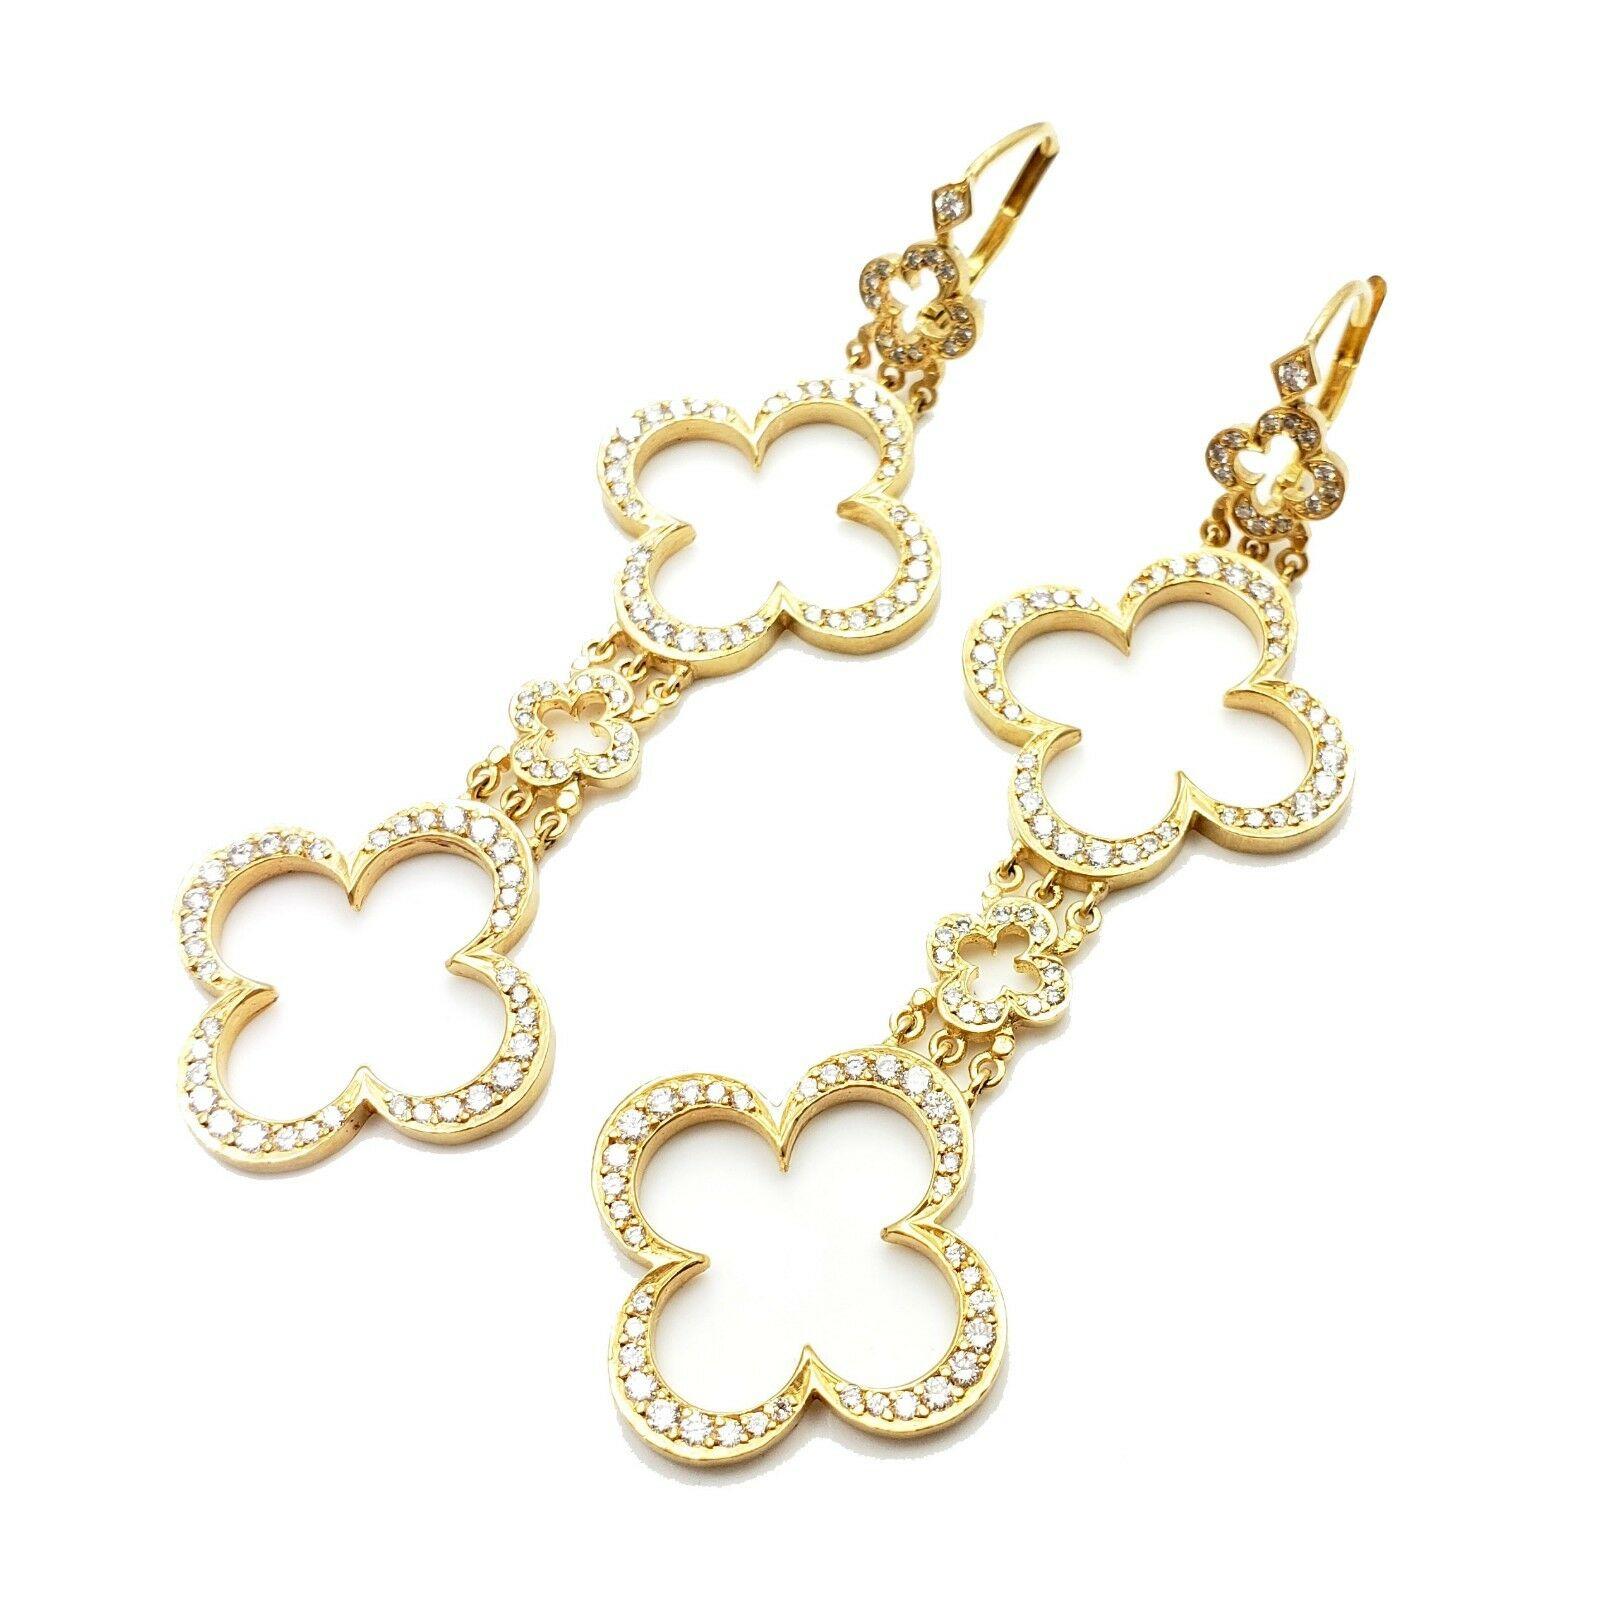 Brilliant Cut Loree Rodkin Large Diamond Cross Yellow Gold Earrings For Sale